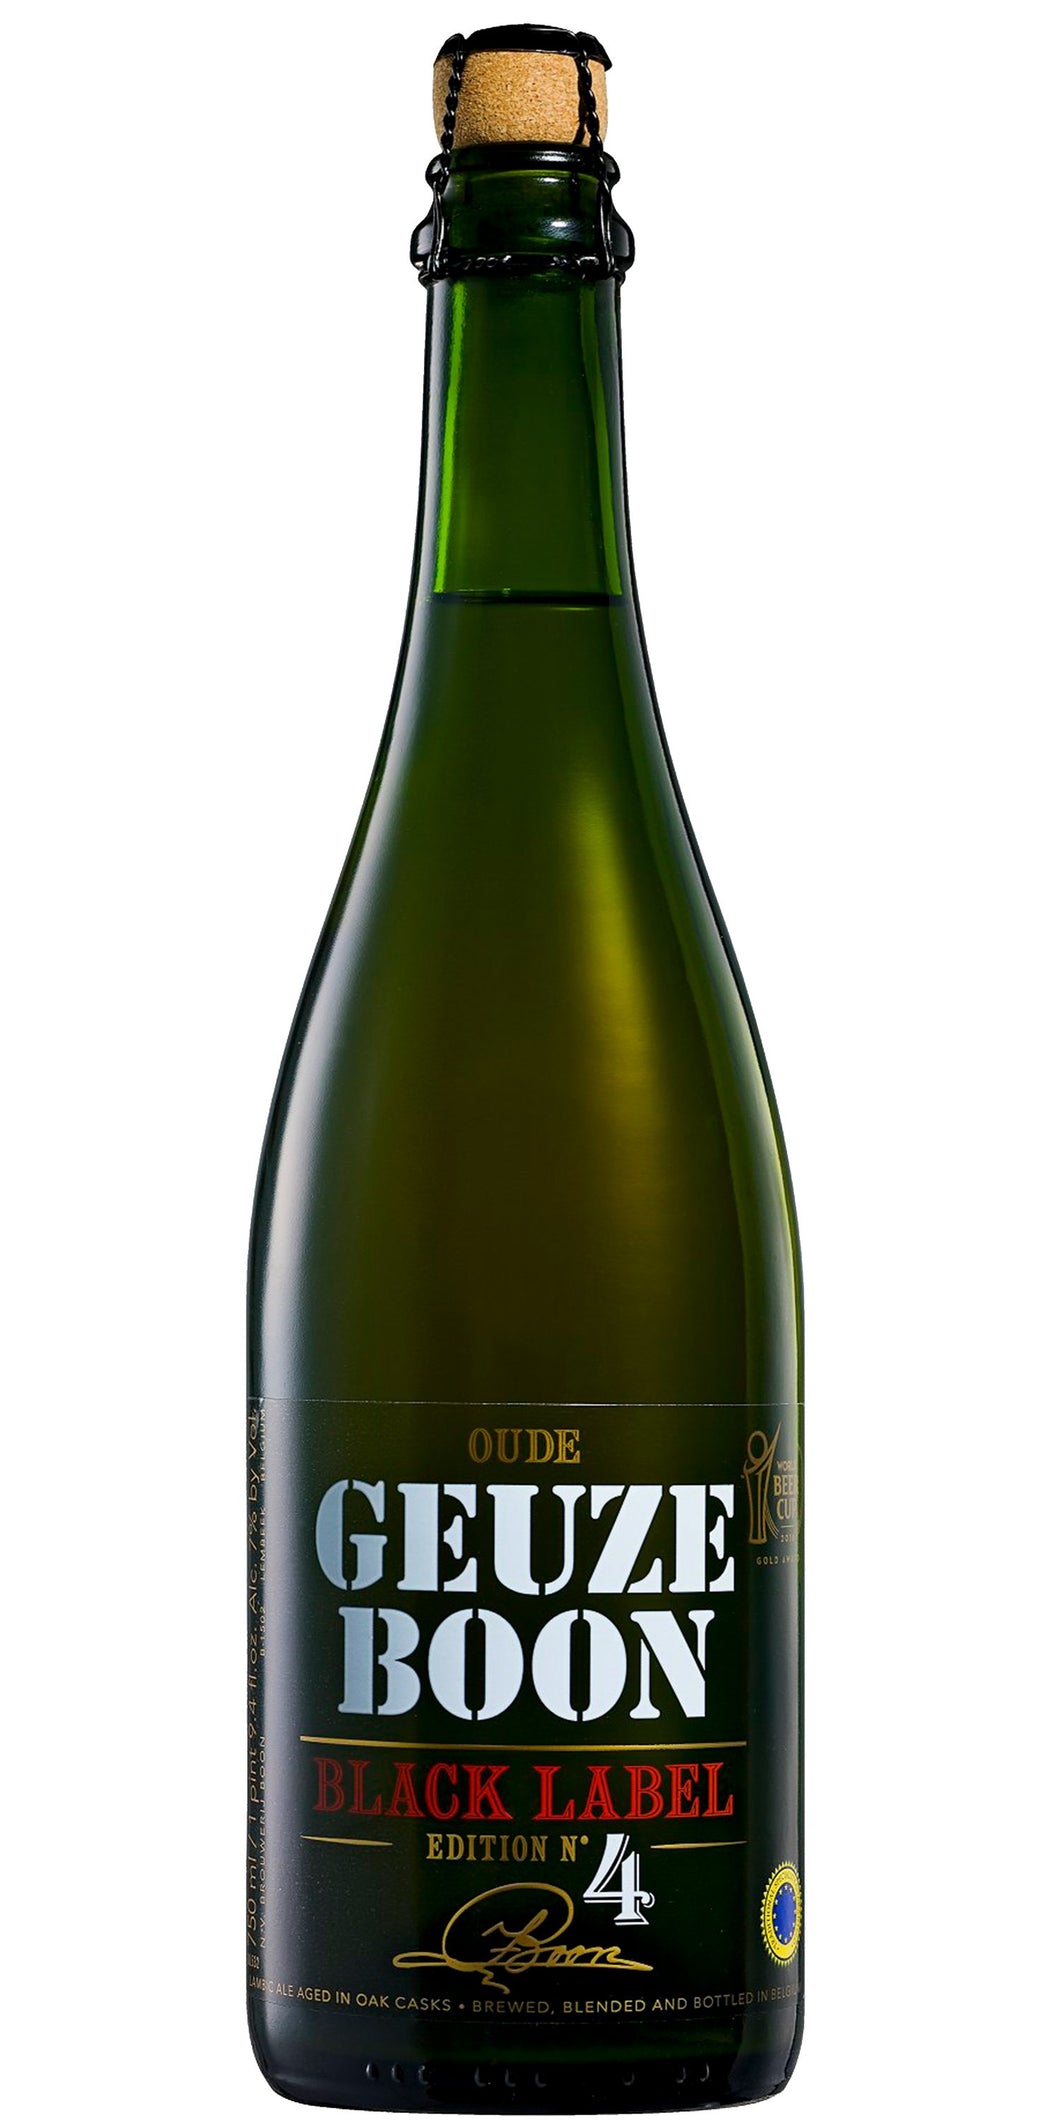 Oude Geuze Boon Black Label Edition No4 - Brouwerij Boon - Oude Geuze, 7%, 750ml Sharing Beer Bottle